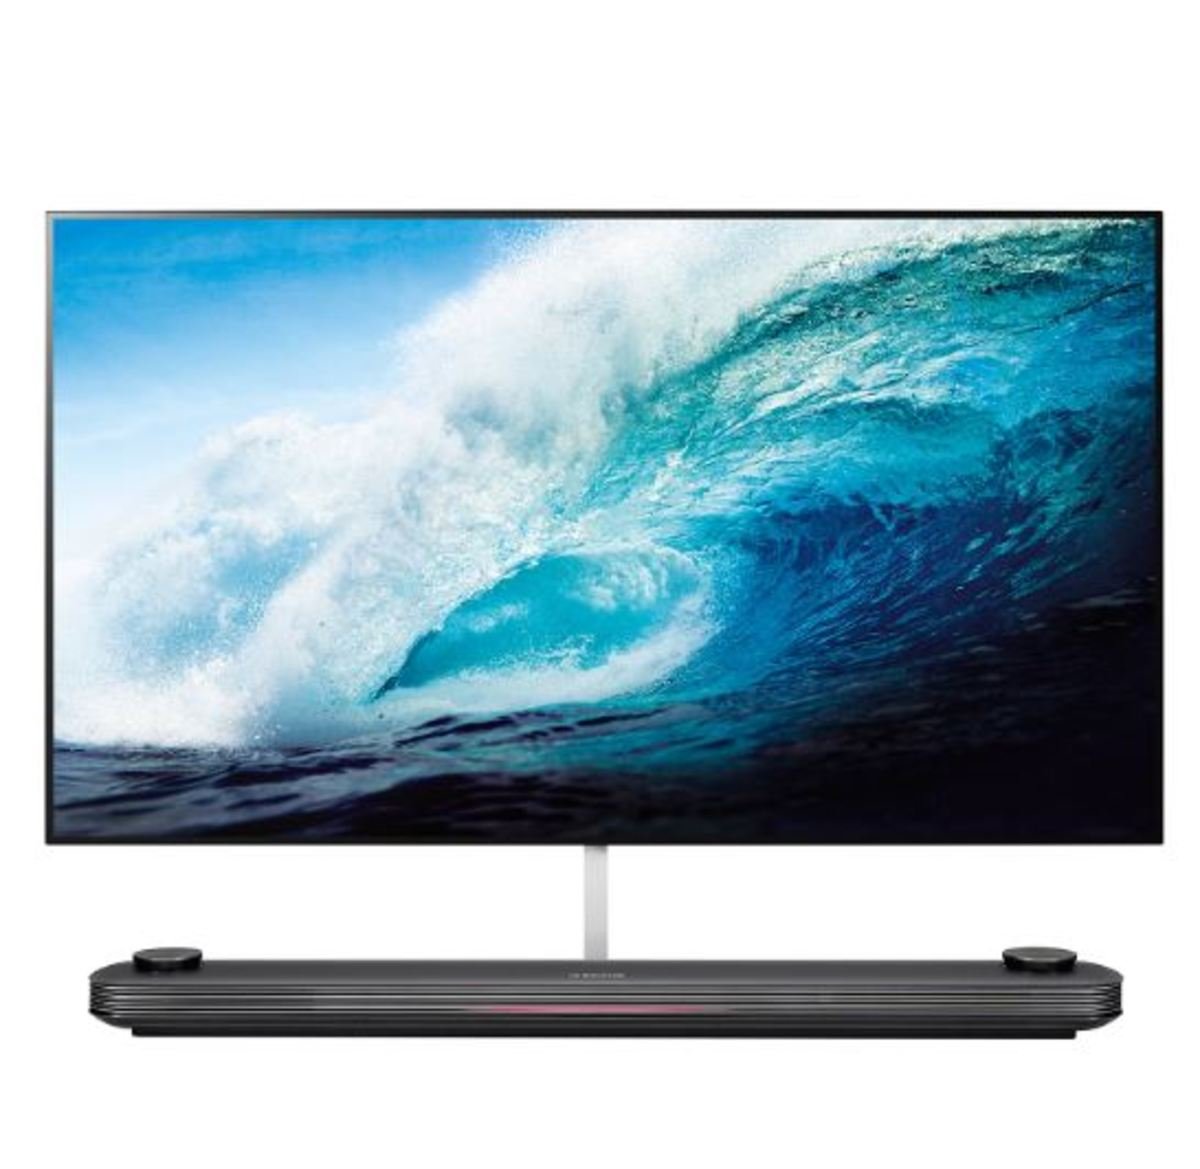 LG 4K Ultra HD Smart OLED TV OLED65W7V 65inch